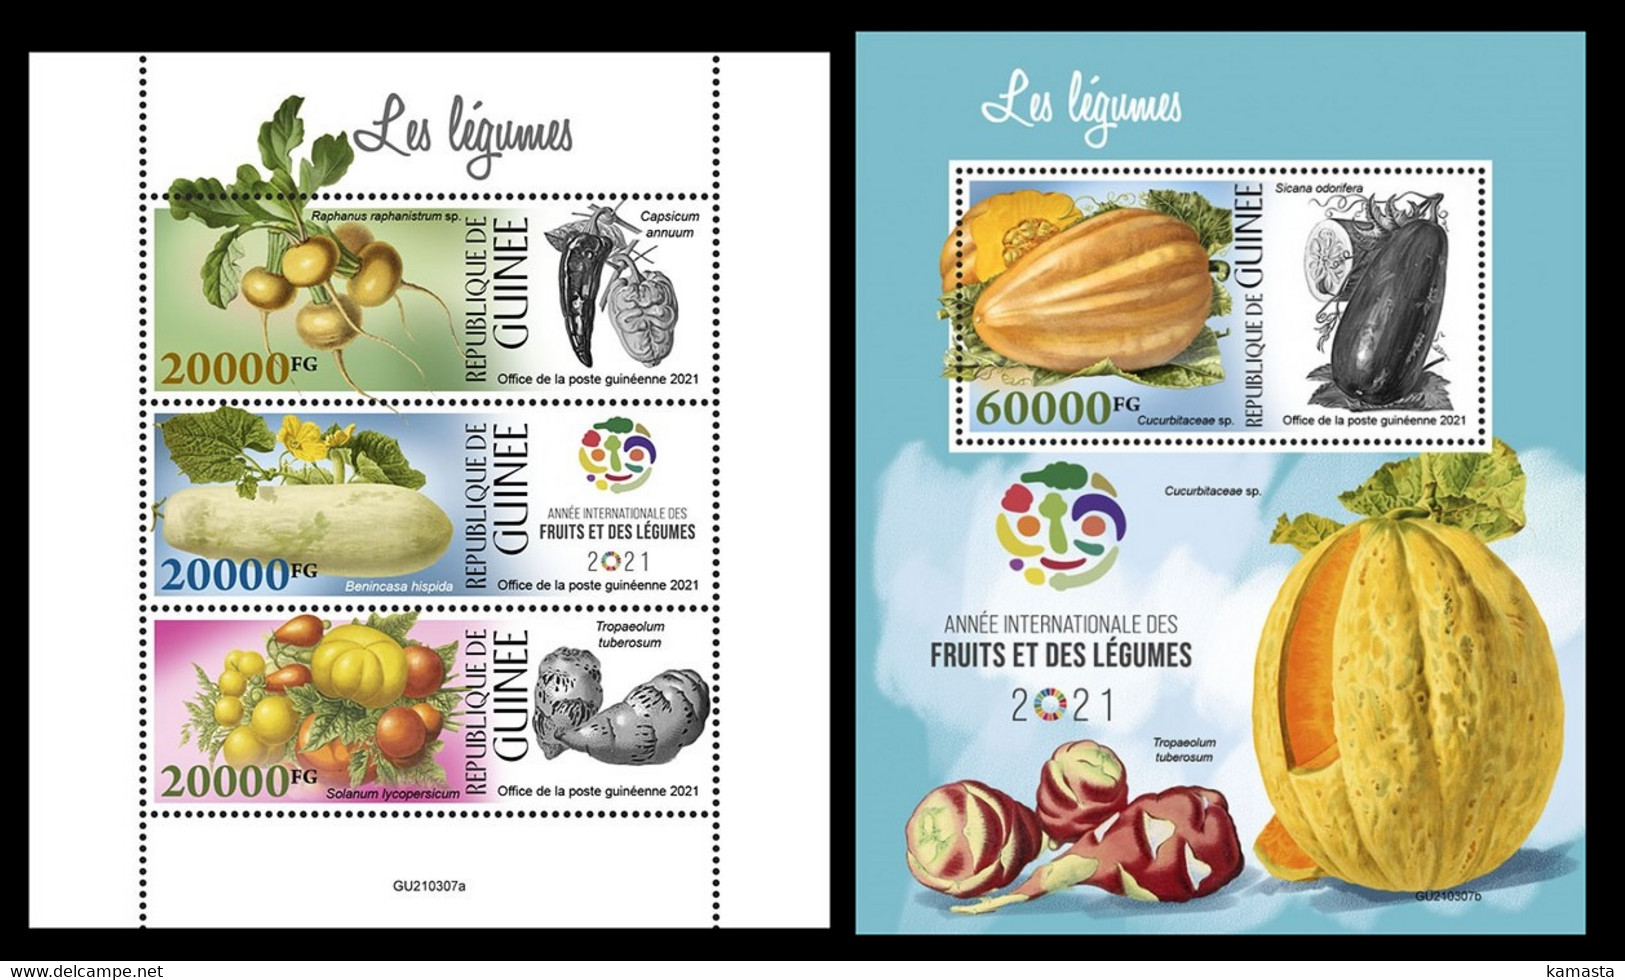 Guinea 2021 Vegetables. (307) OFFICIAL ISSUE - Vegetables